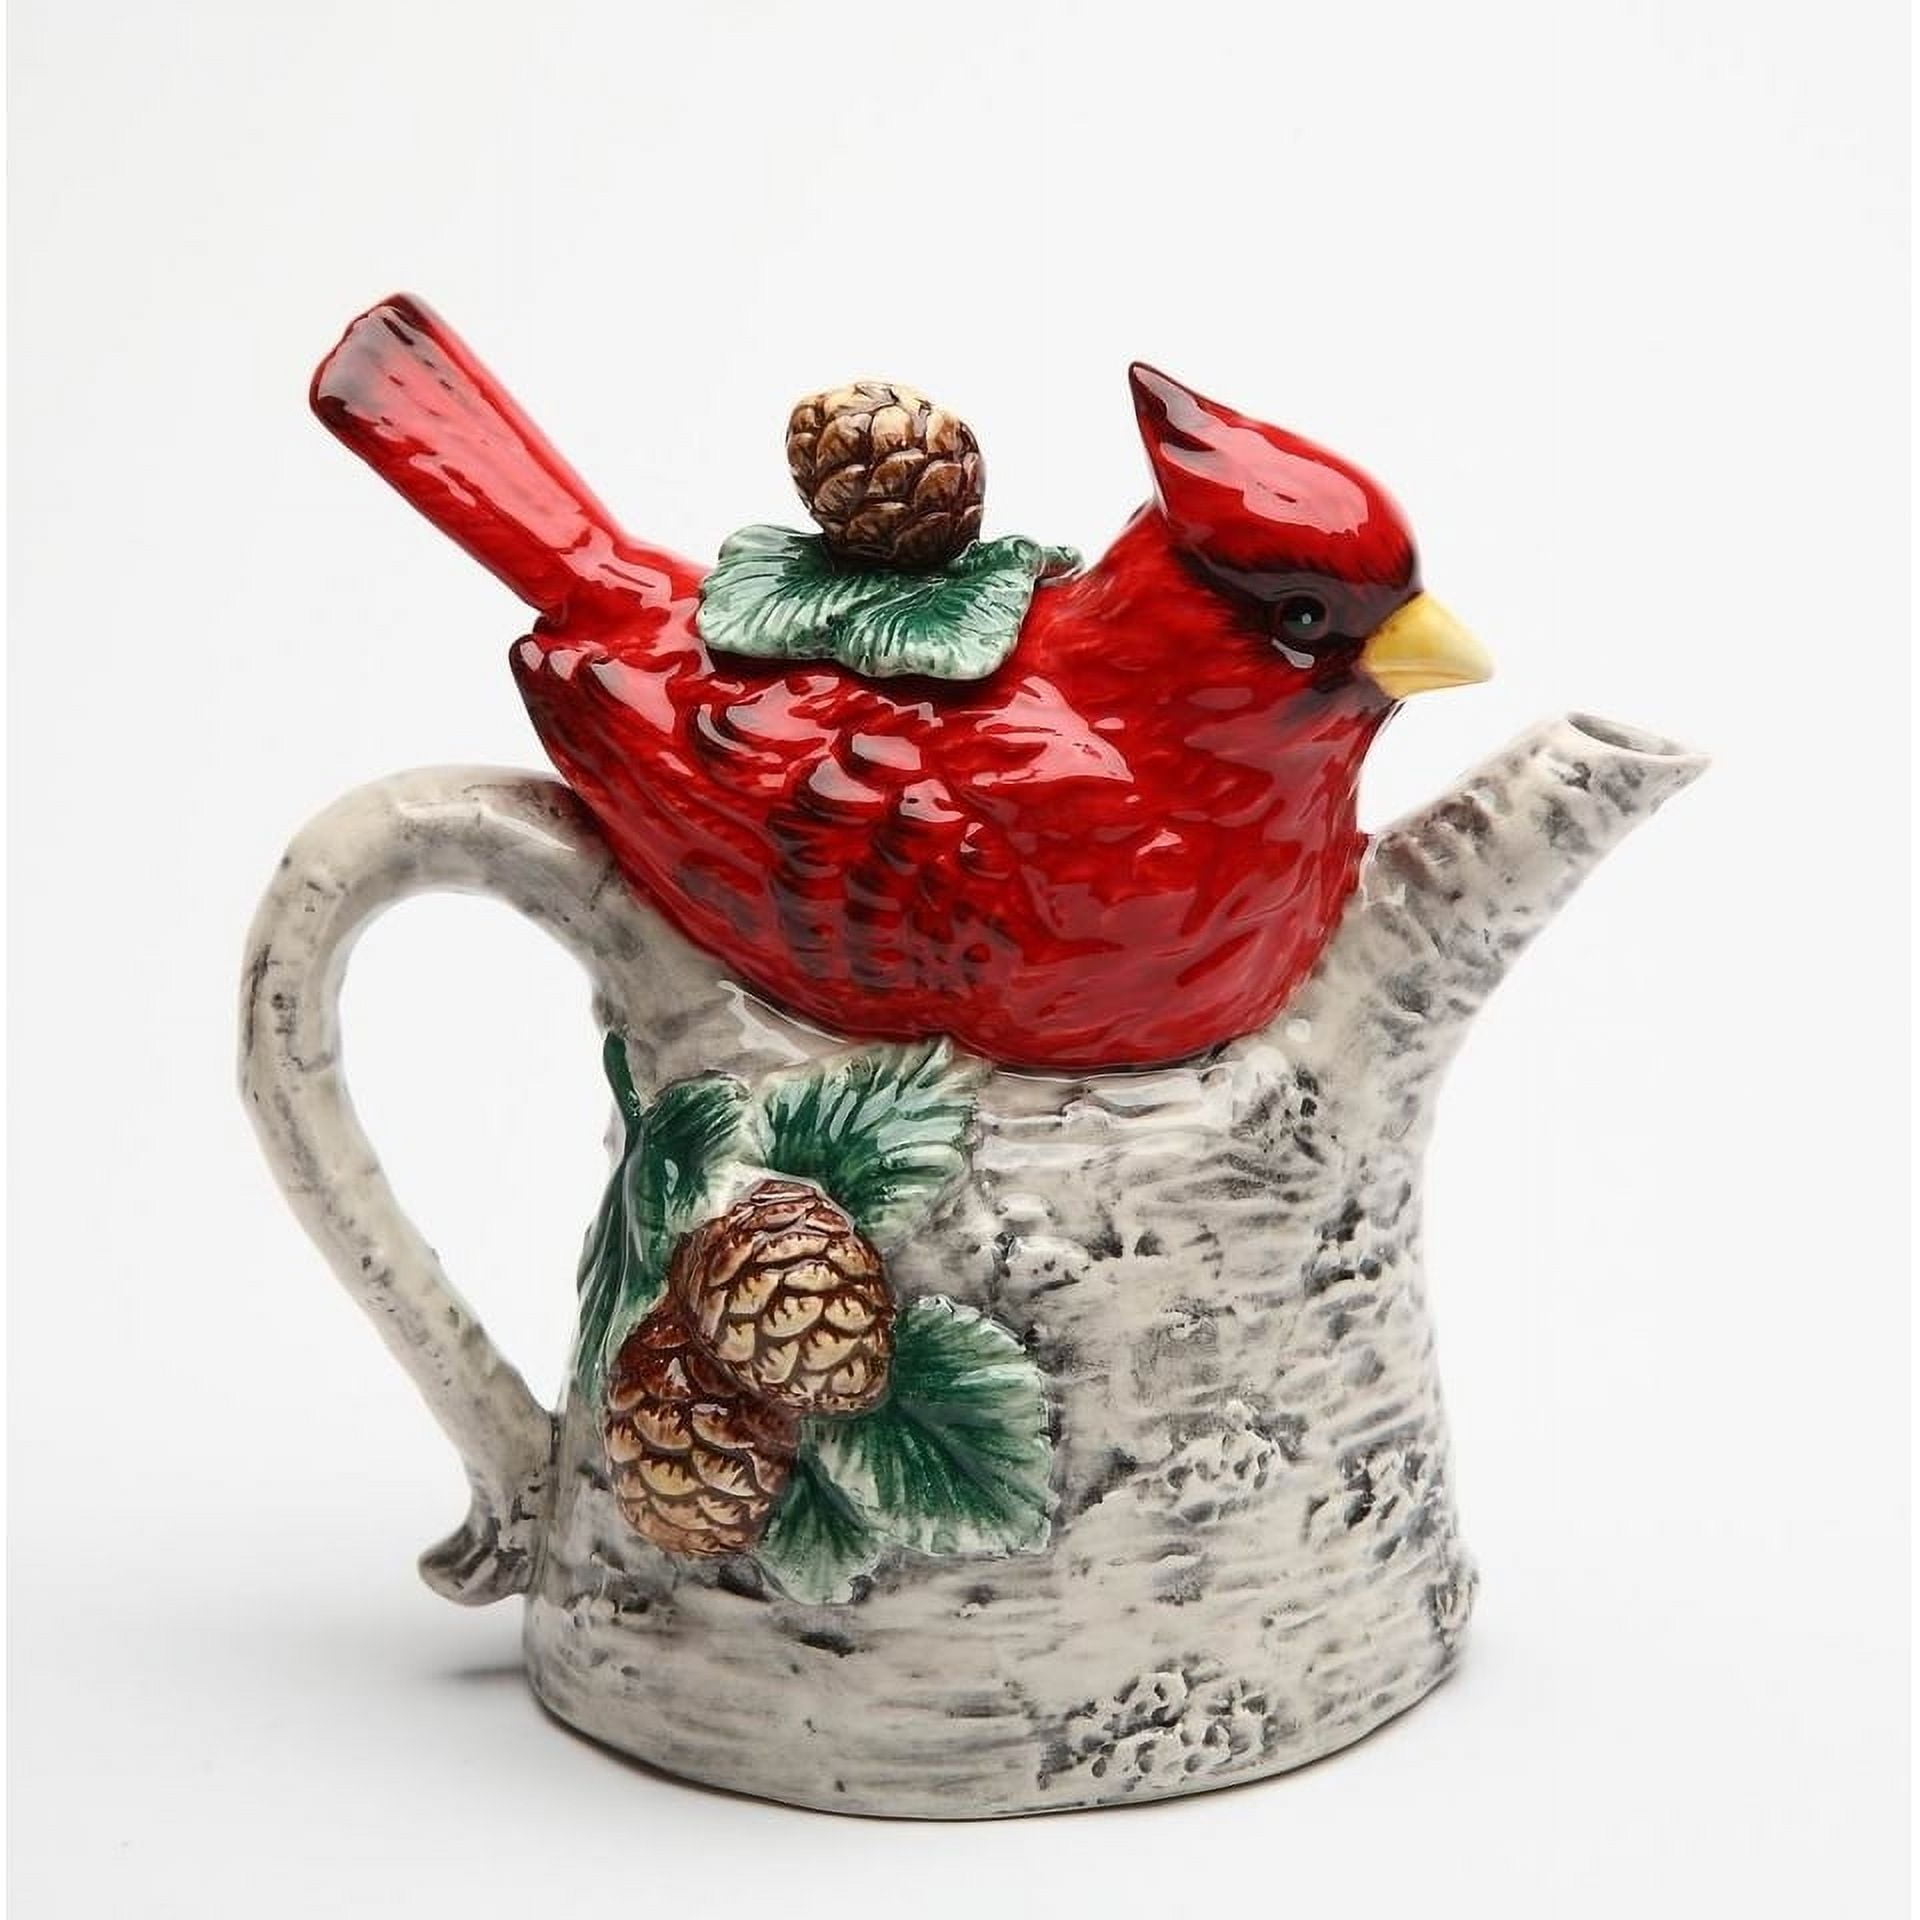 Vintage Cardinal Fashion Stove Teapot Decorative Ceramic Stove Top